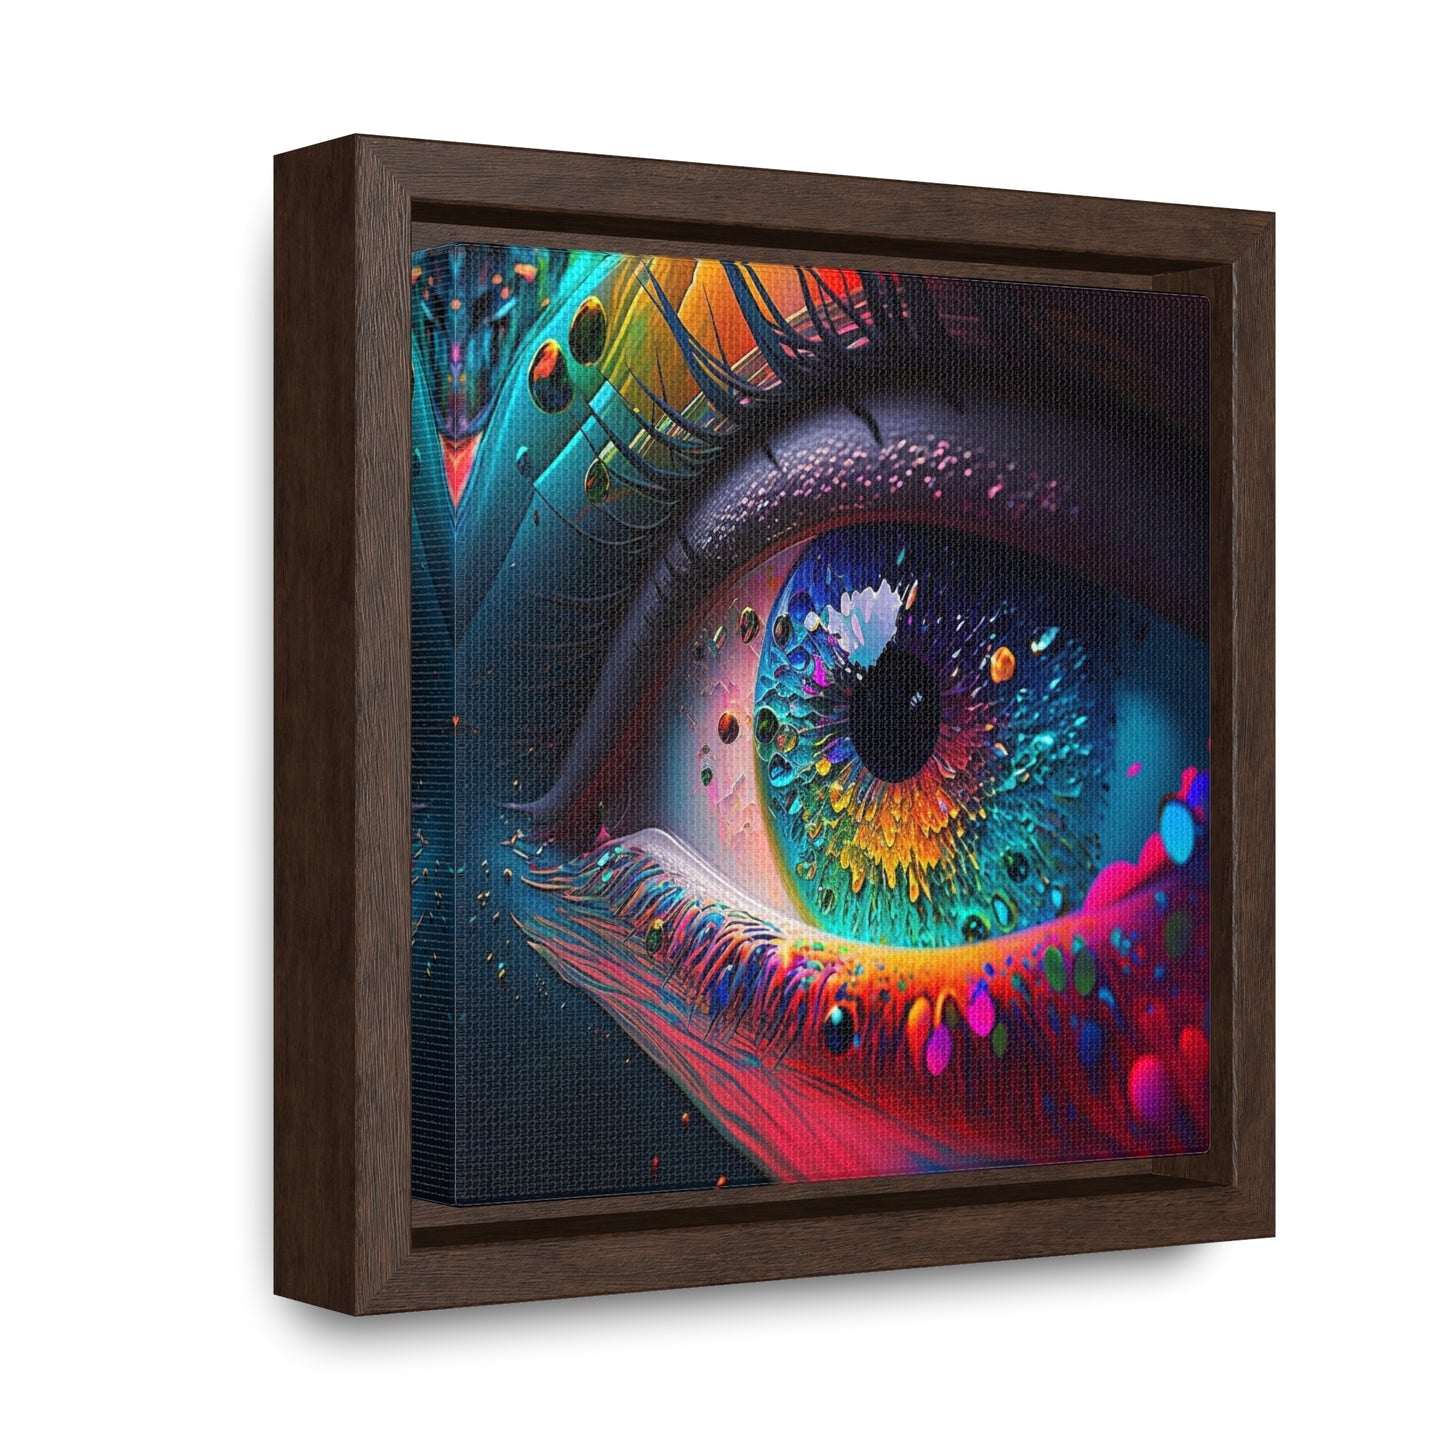 Gallery Canvas Wraps, Square Frame Macro Eye Photo 3